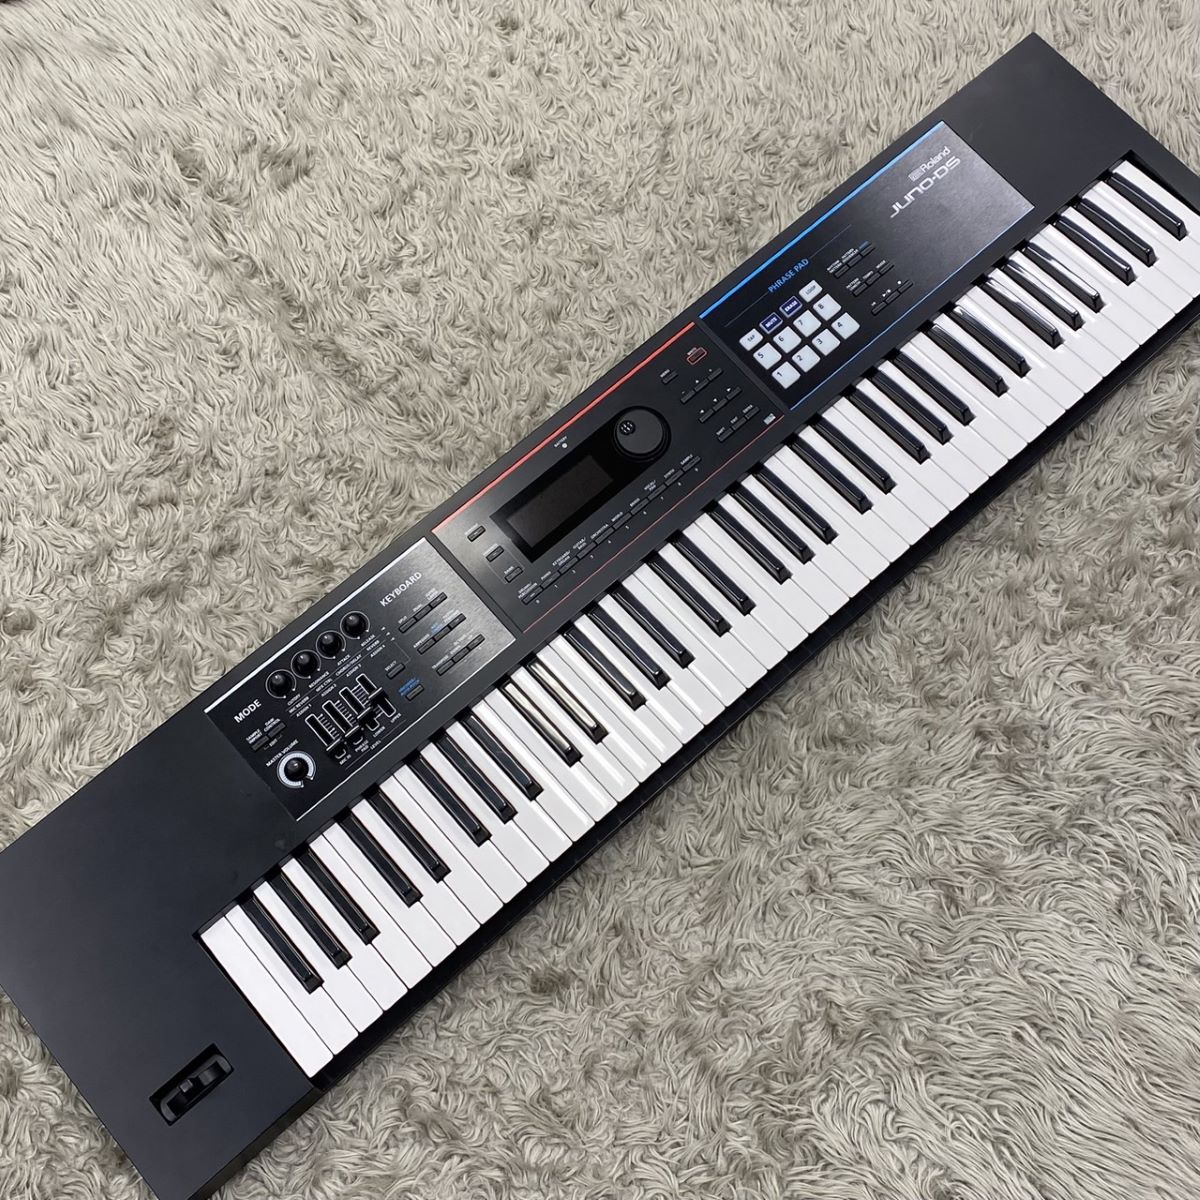 Roland JUNO-DS88 シンセサイザー 88鍵盤ピアノタッチ 【ローランド 